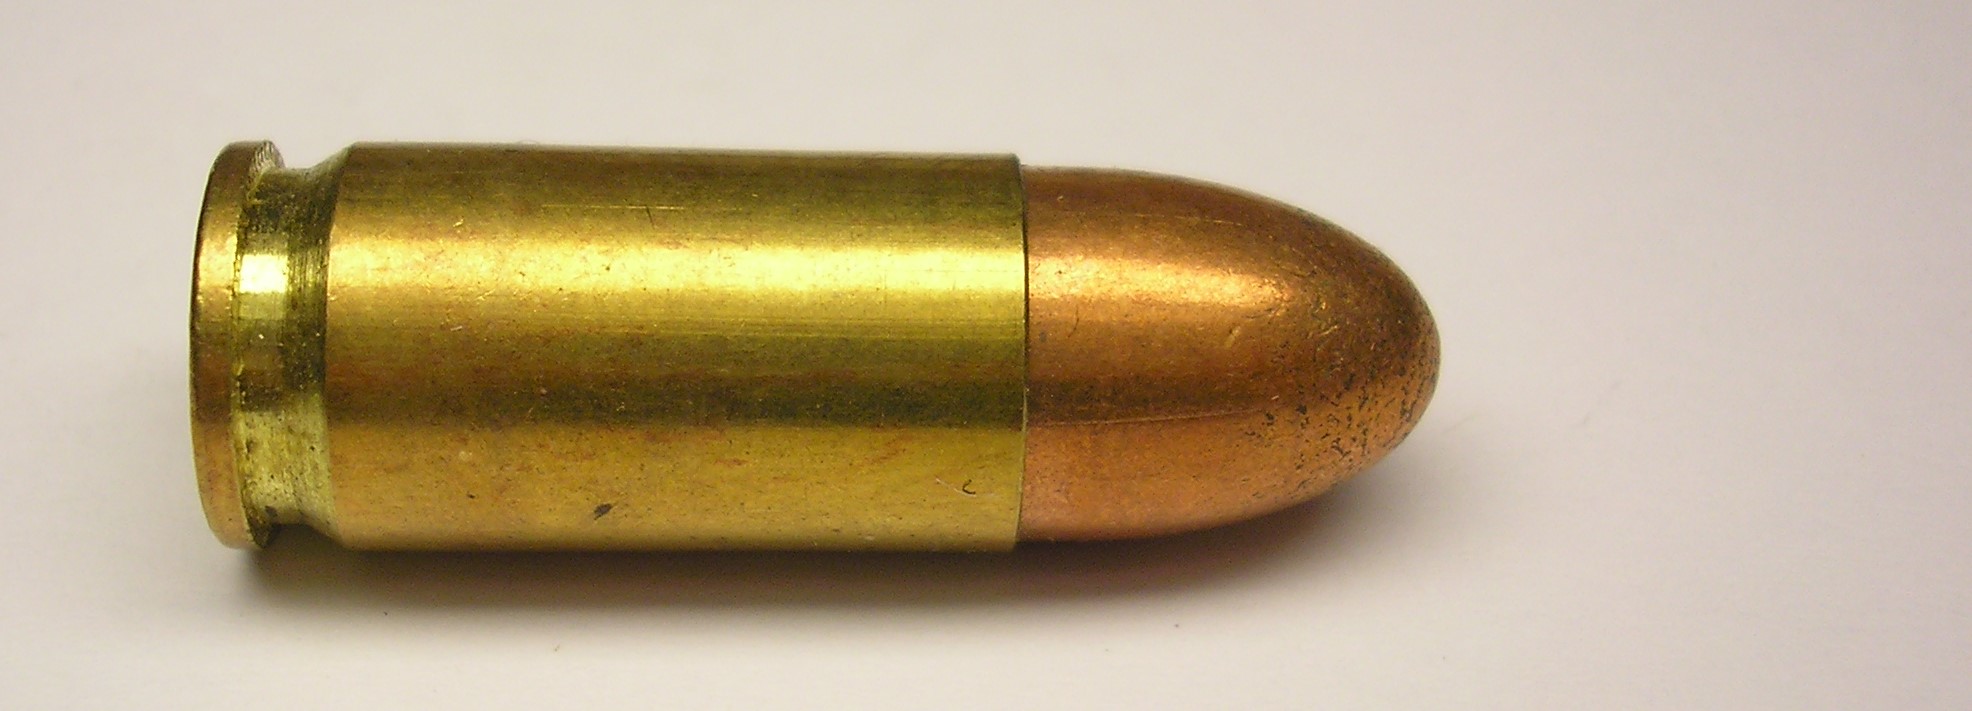 ./ammo/9mm/esker/Eske-9mm-Helmantel-16skudd-1952-1953-3.JPG